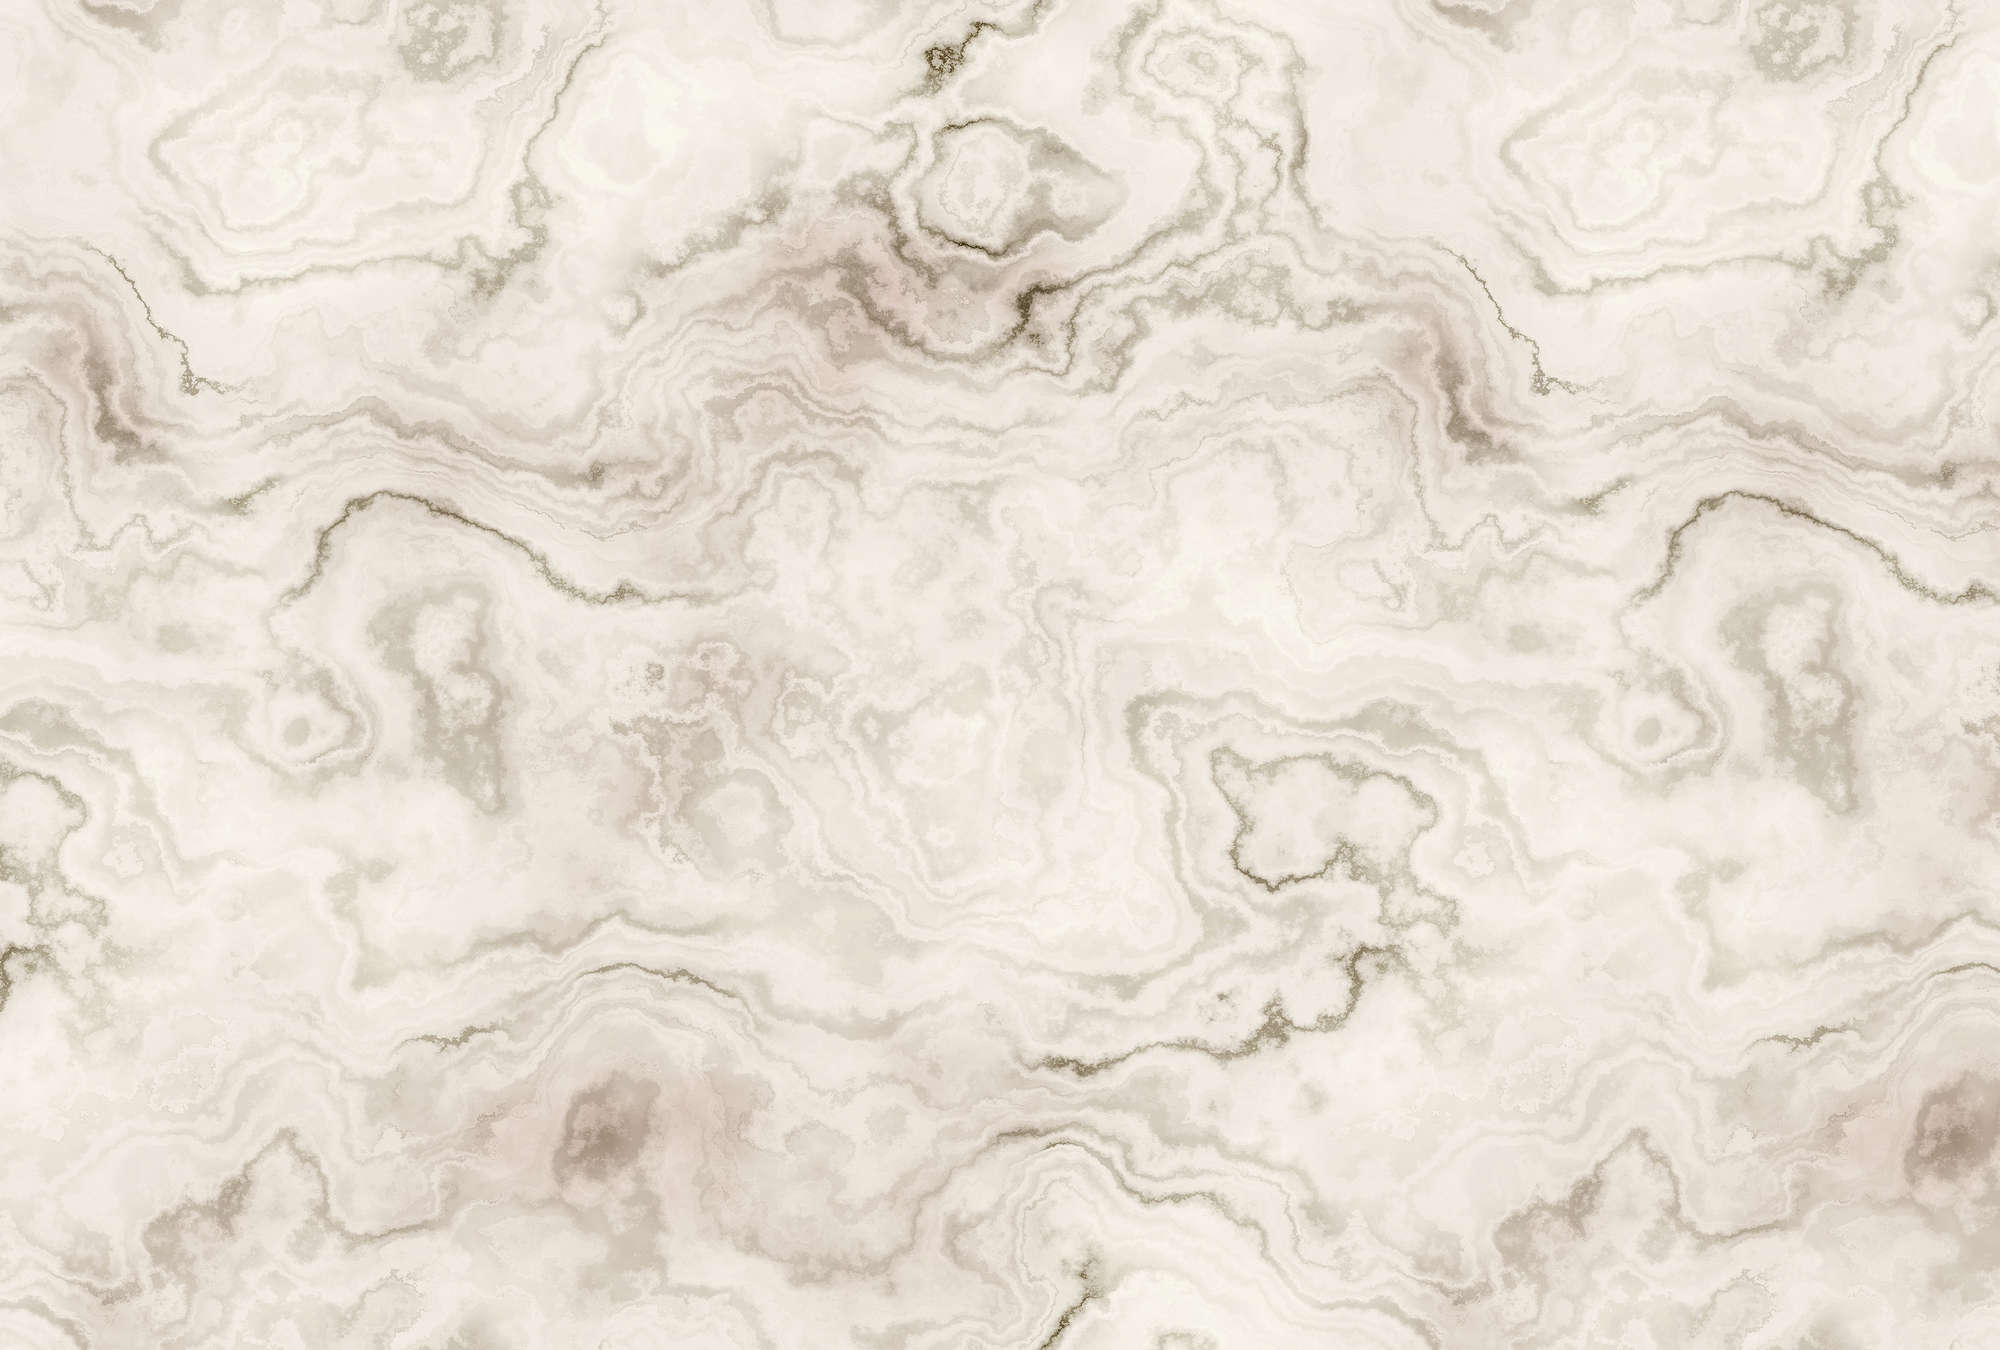             Carrara 2 - Elegant marble-look wallpaper - Beige, Brown | Pearl smooth non-woven
        